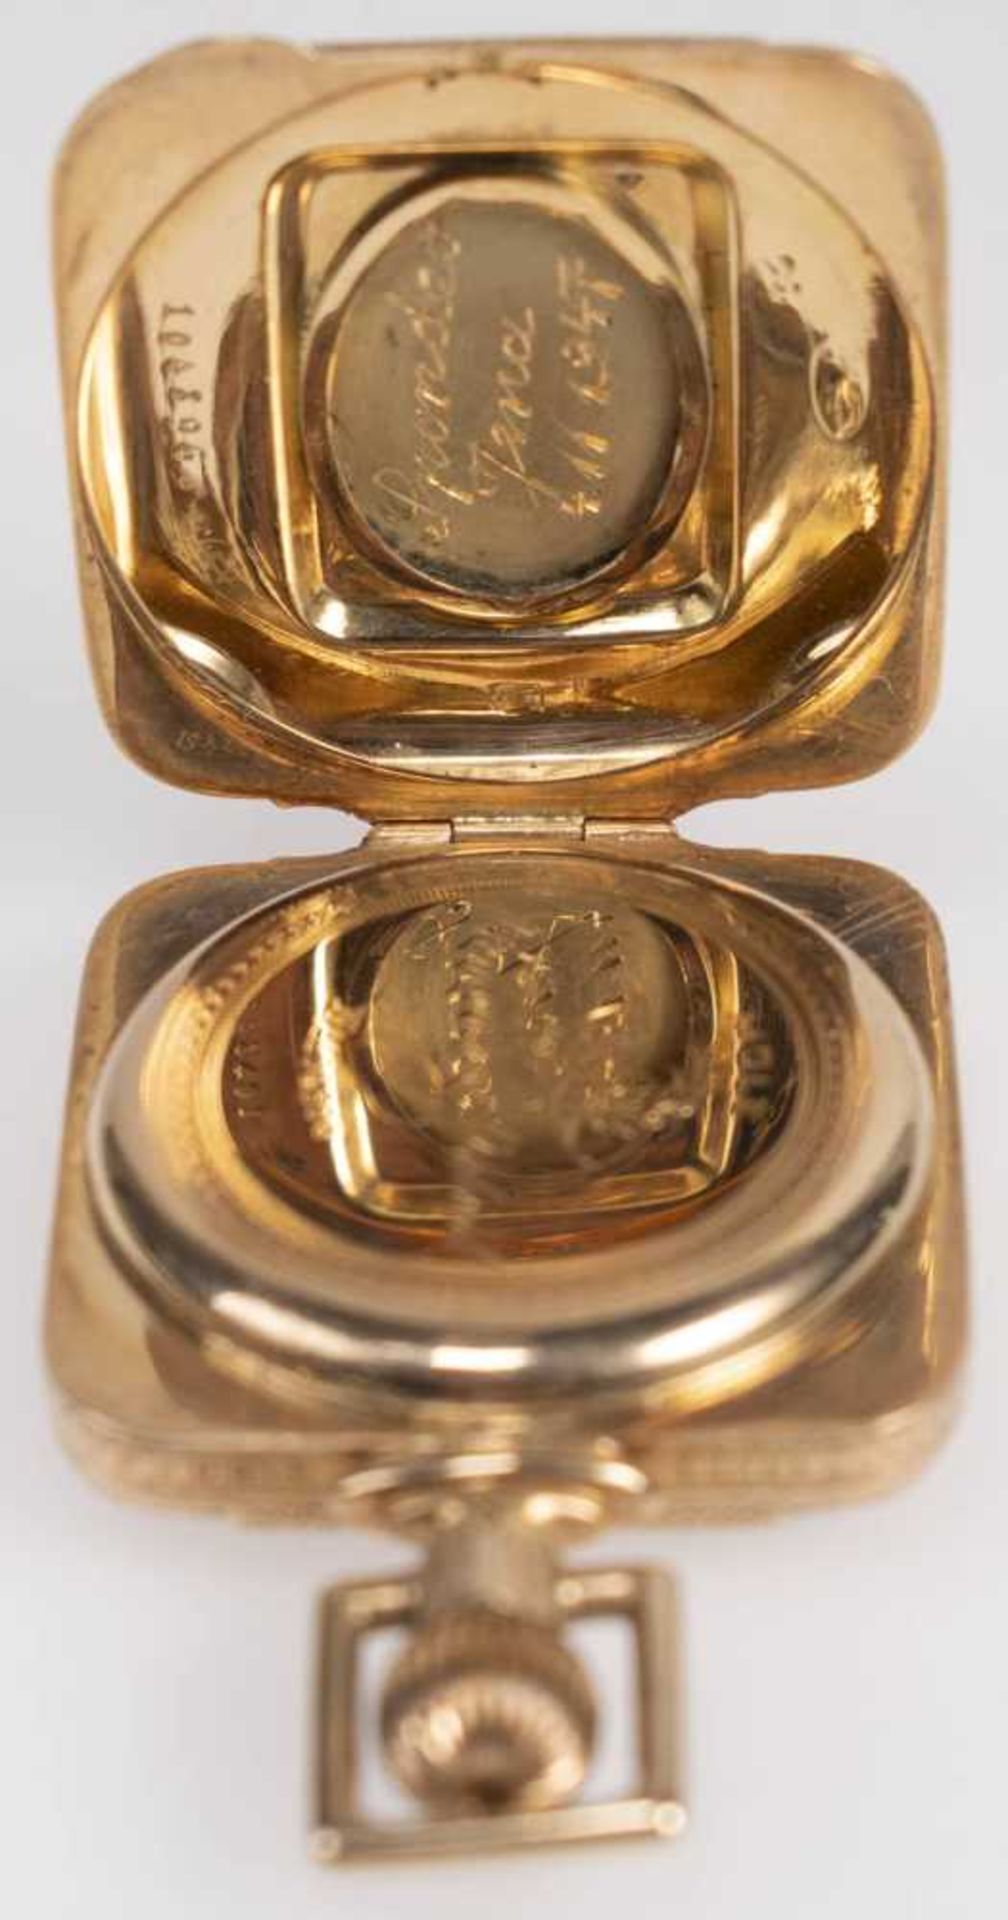 Adrian Molé Rementoir Savonette Taschenuhr. Ca. 32,8mm, 585er Gold, Handaufzug, Ref.-Nr.: 104896. Em - Bild 4 aus 4